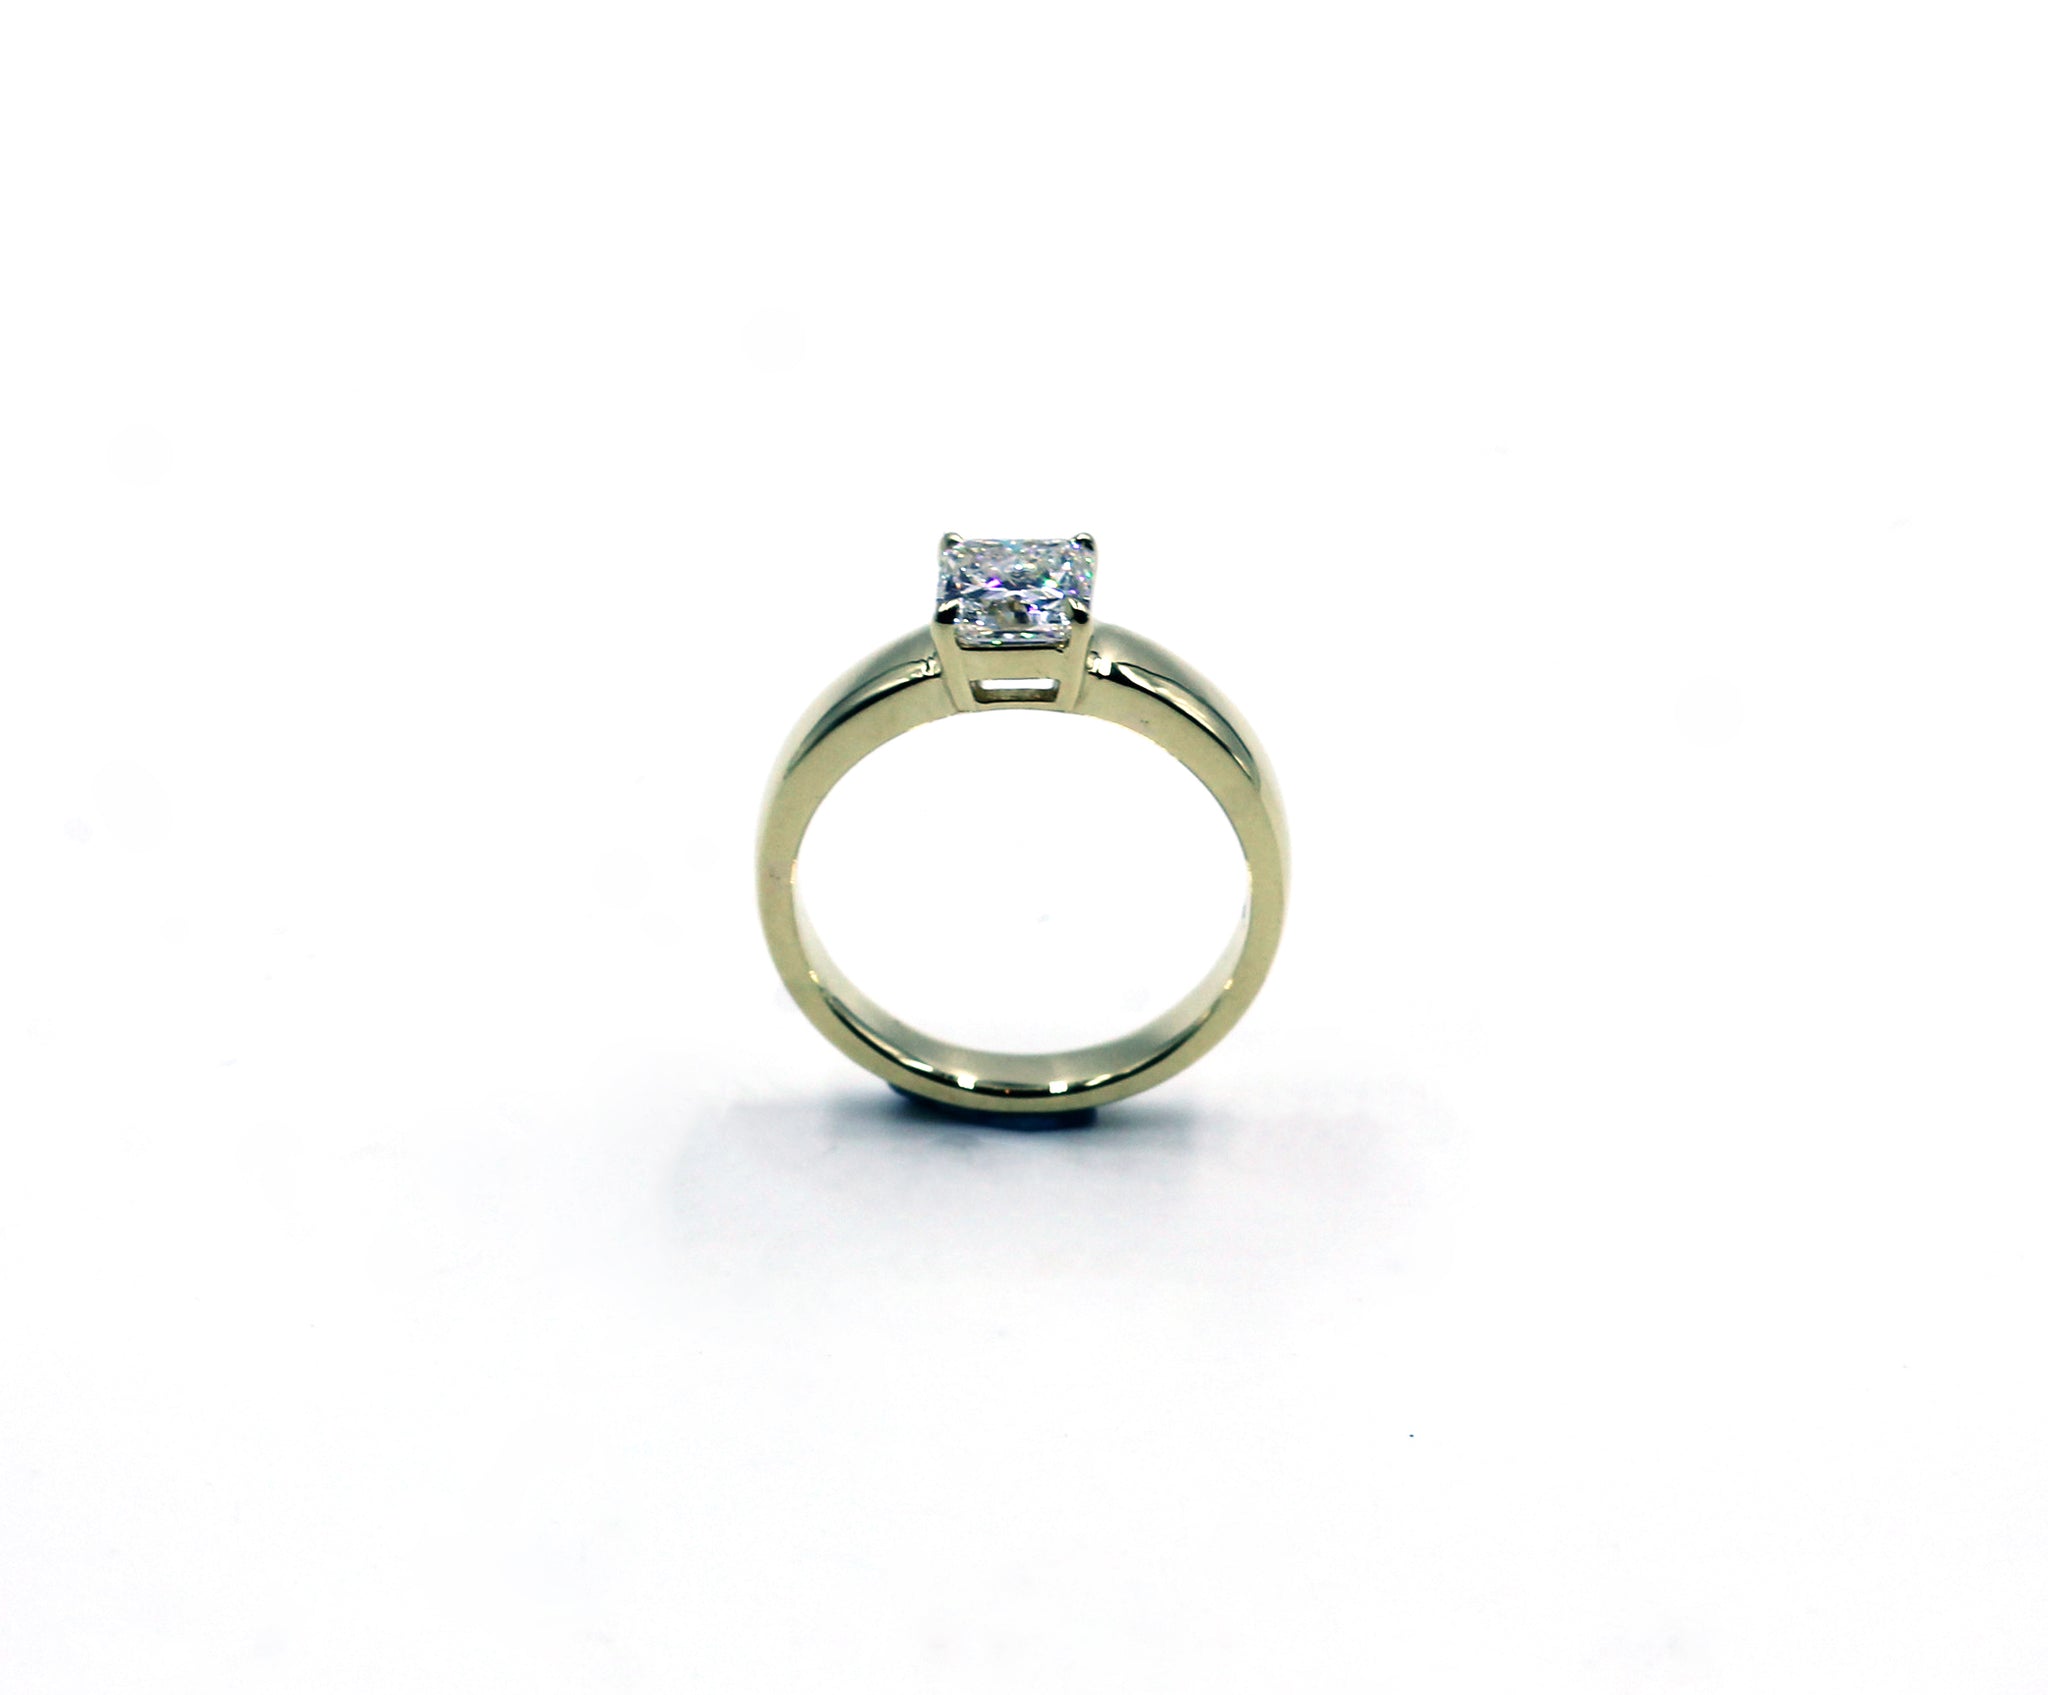 Deleuse Diamond Ring, SOLD